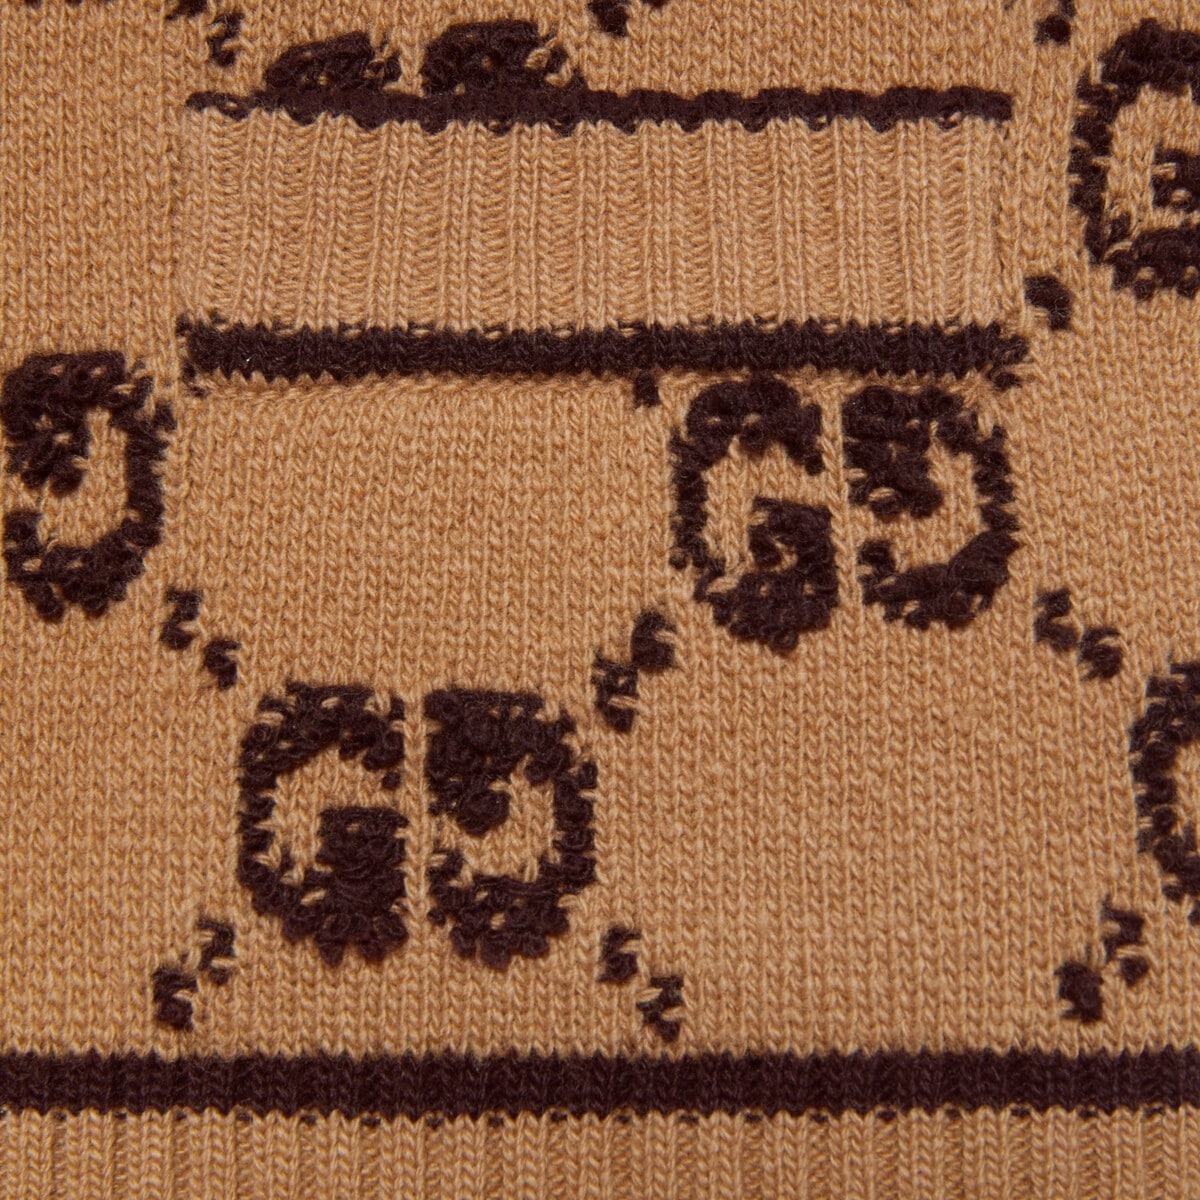 GG wool bouclé jacquard cardigan - 8